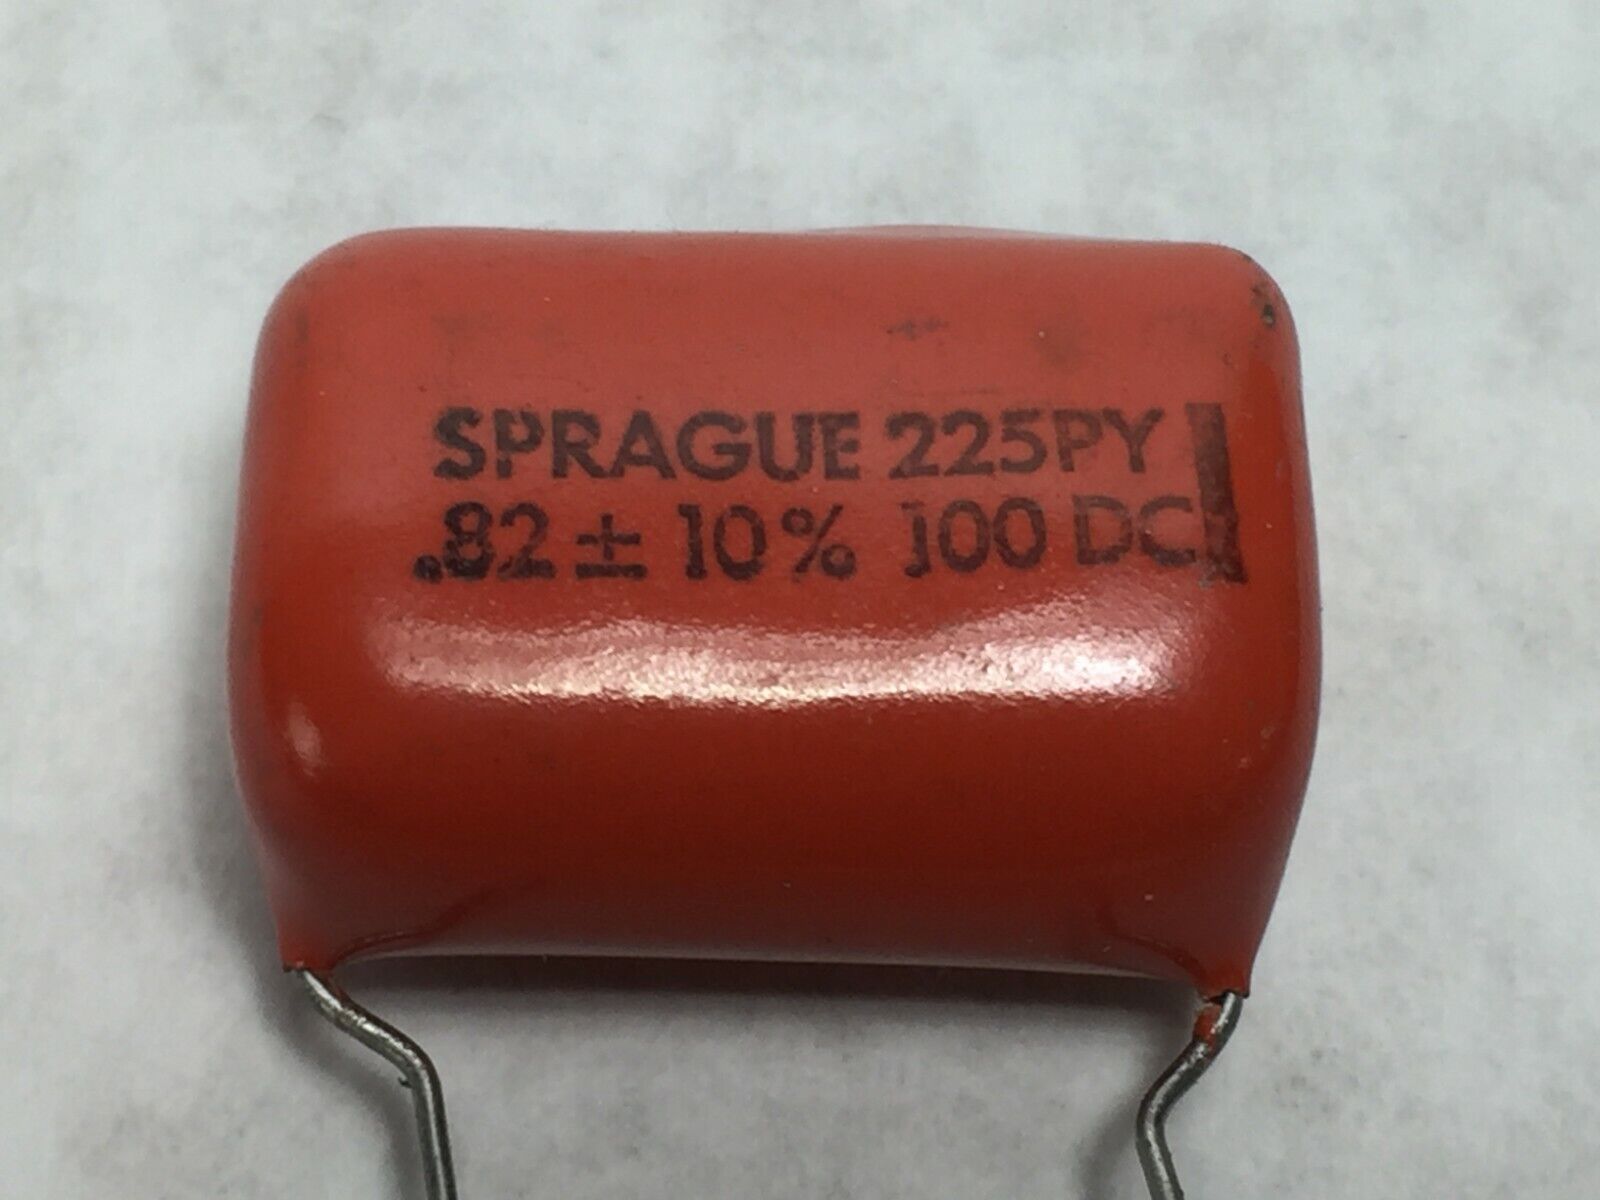 NOS  Sprague 225PY Capacitors Orange Drop .82  100 DC   Lot of 13